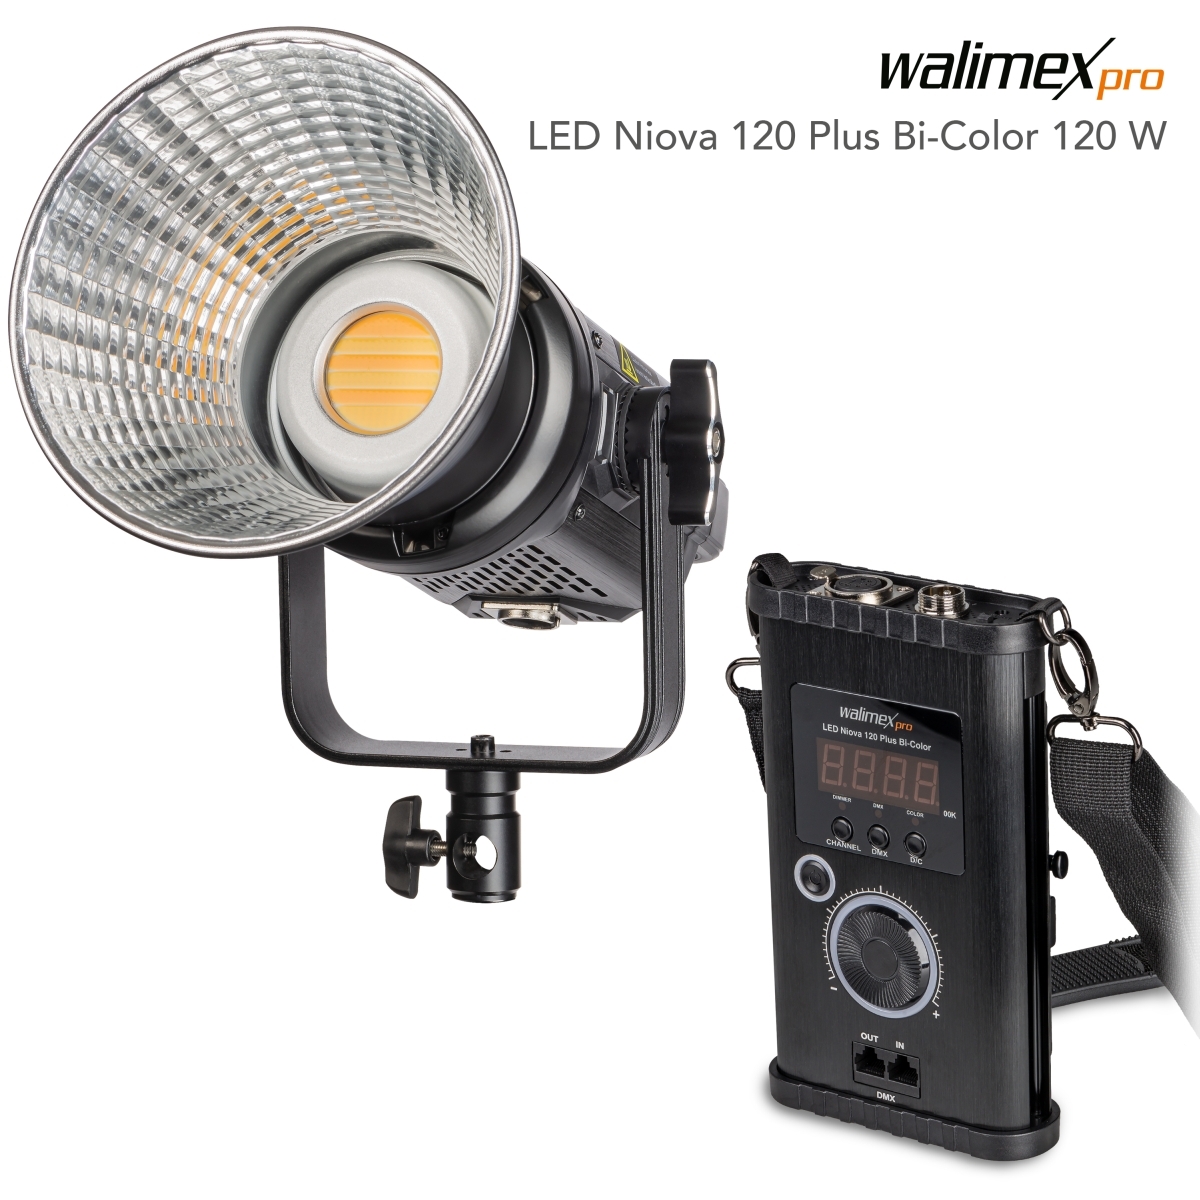 Walimex pro LED Niova 120 Plus Bi-Color 120W